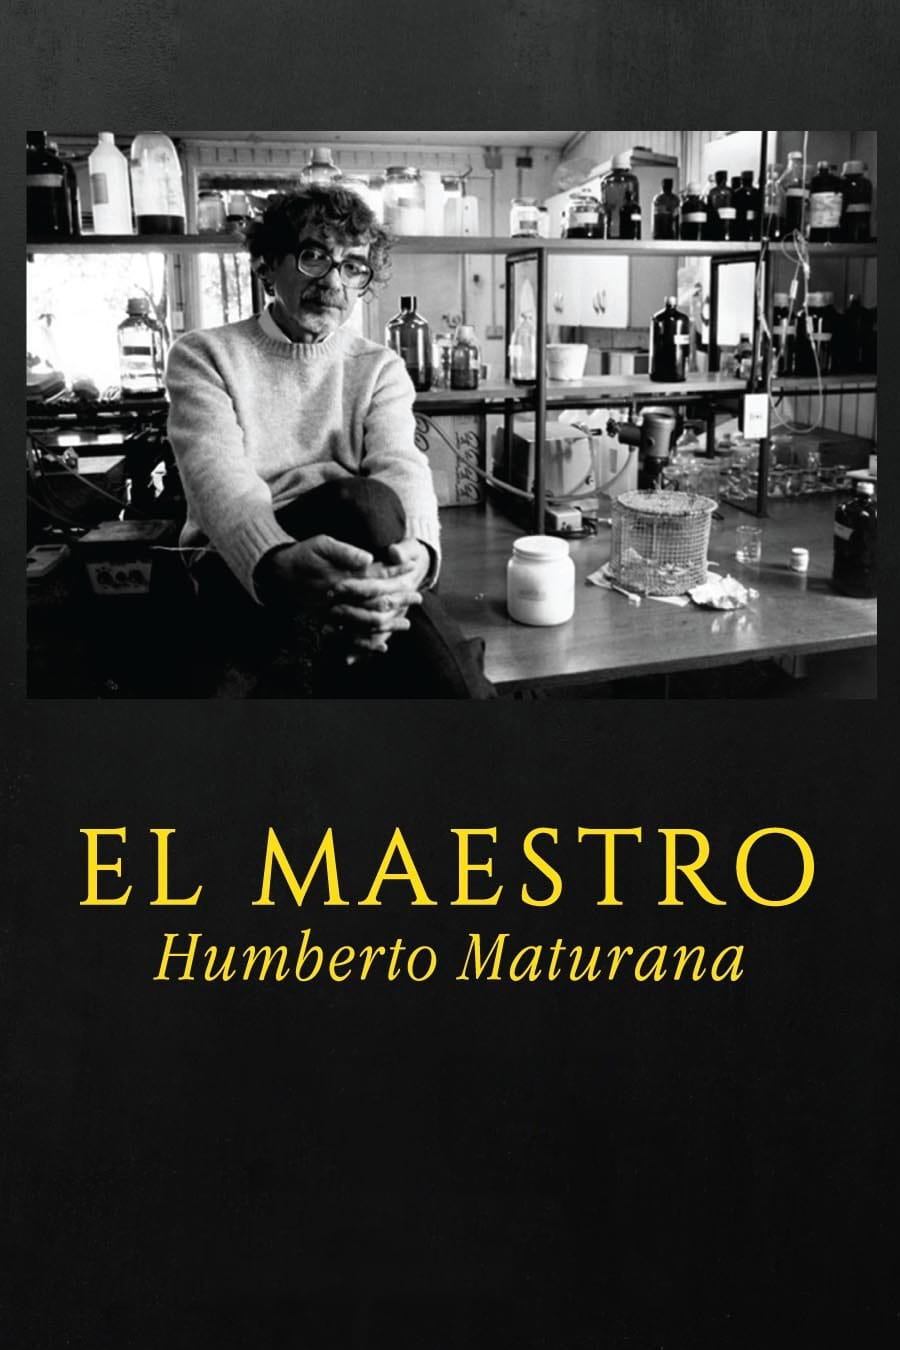 El maestro Humberto Maturana